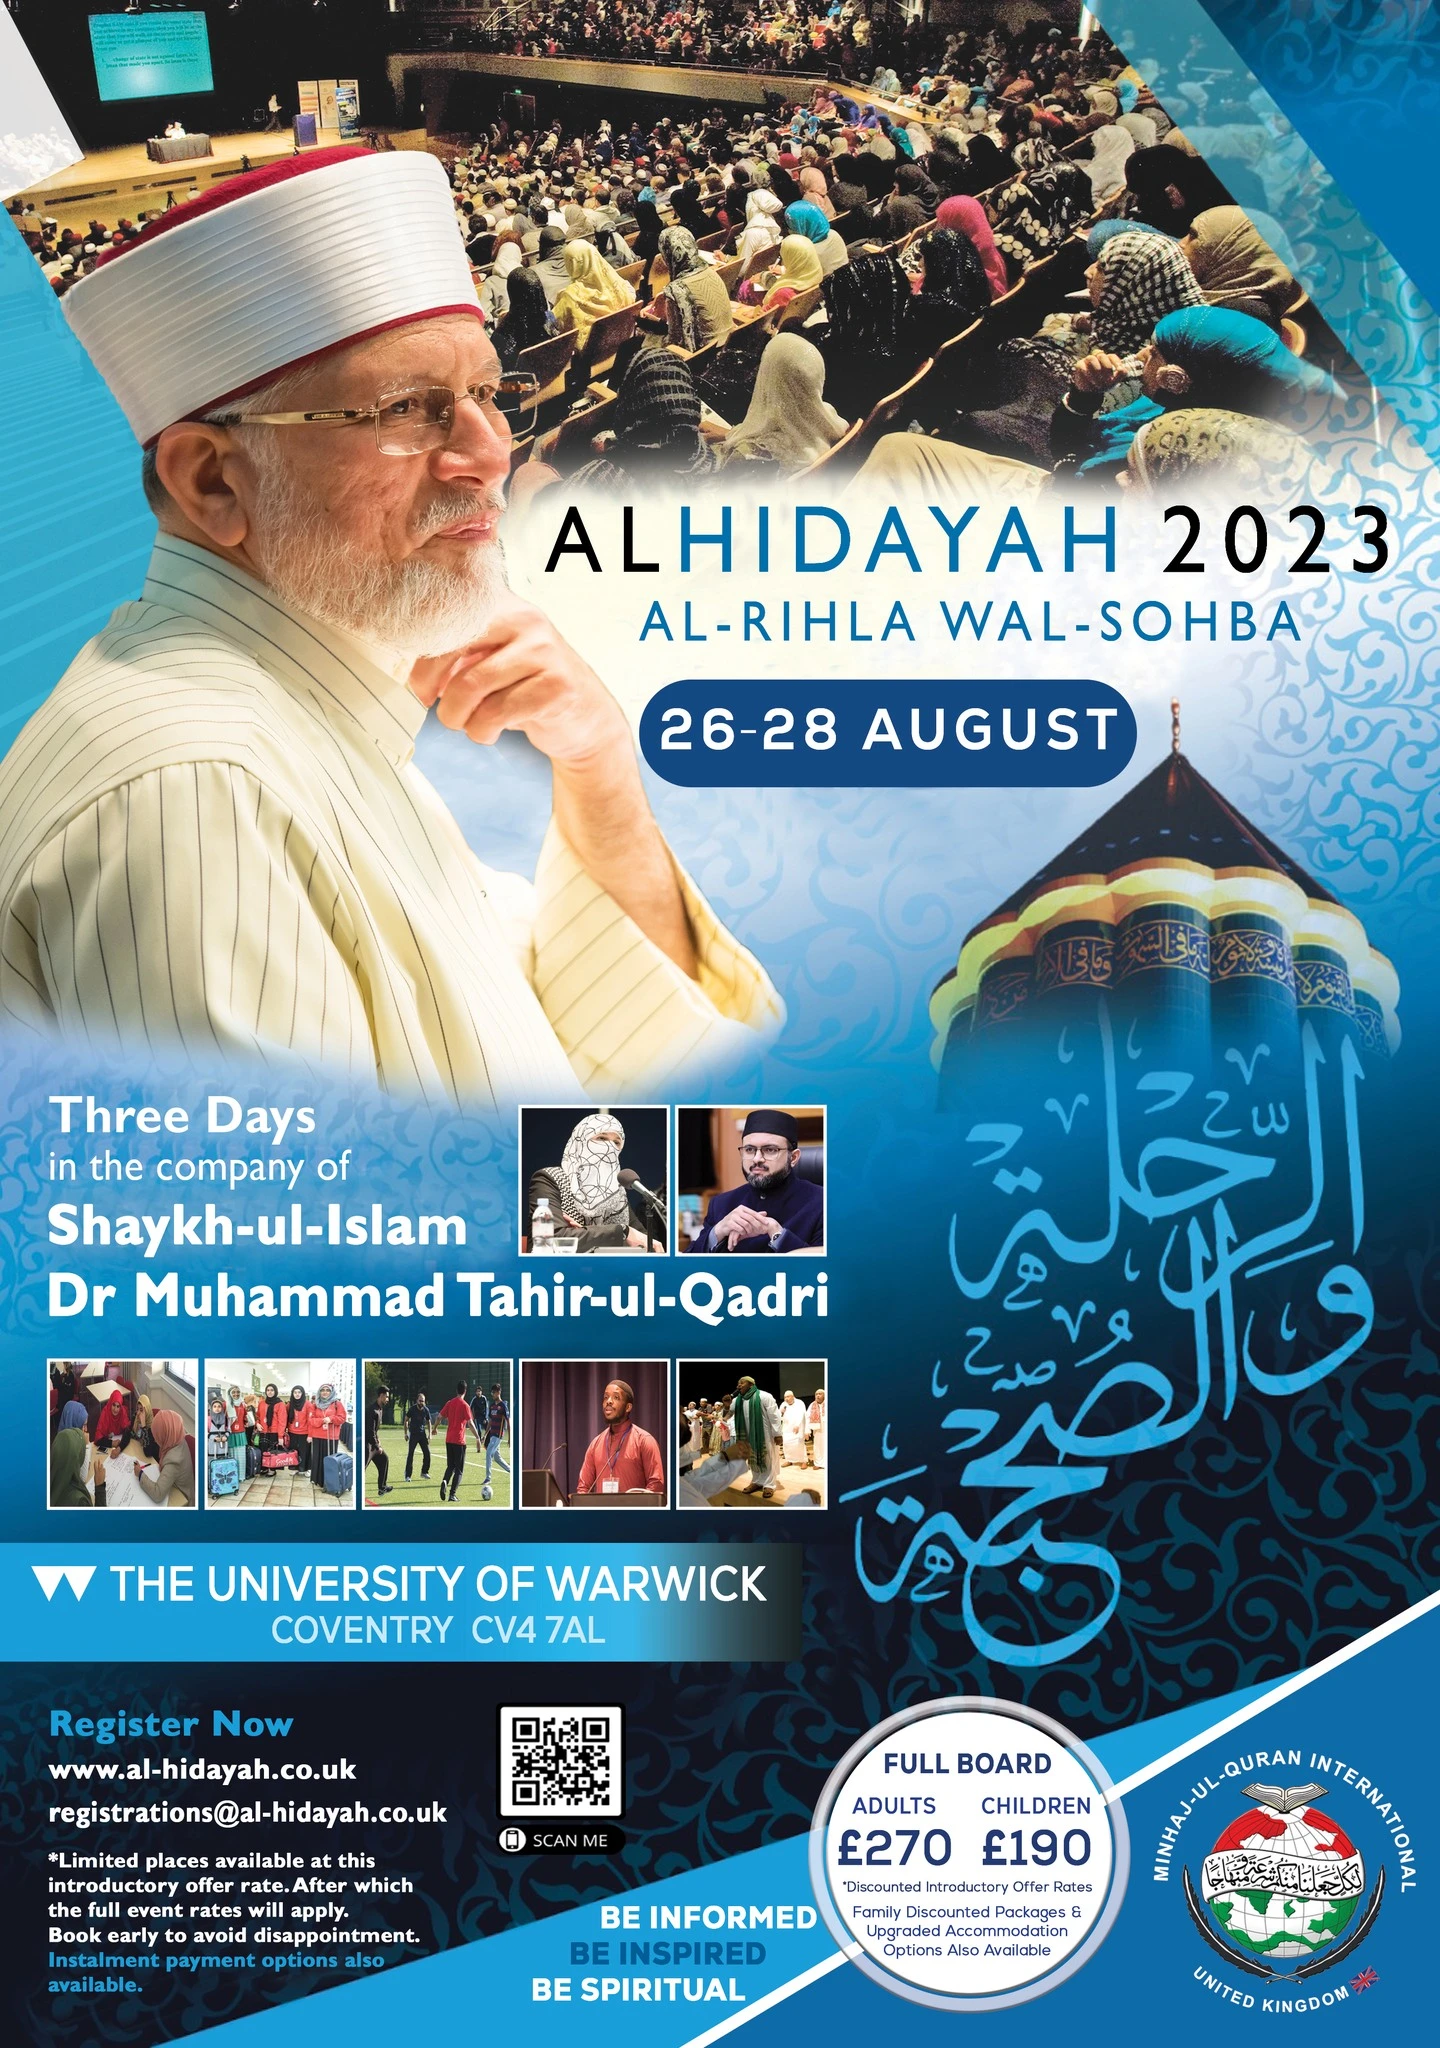 Al-Hidayah 2023 registrations are now open